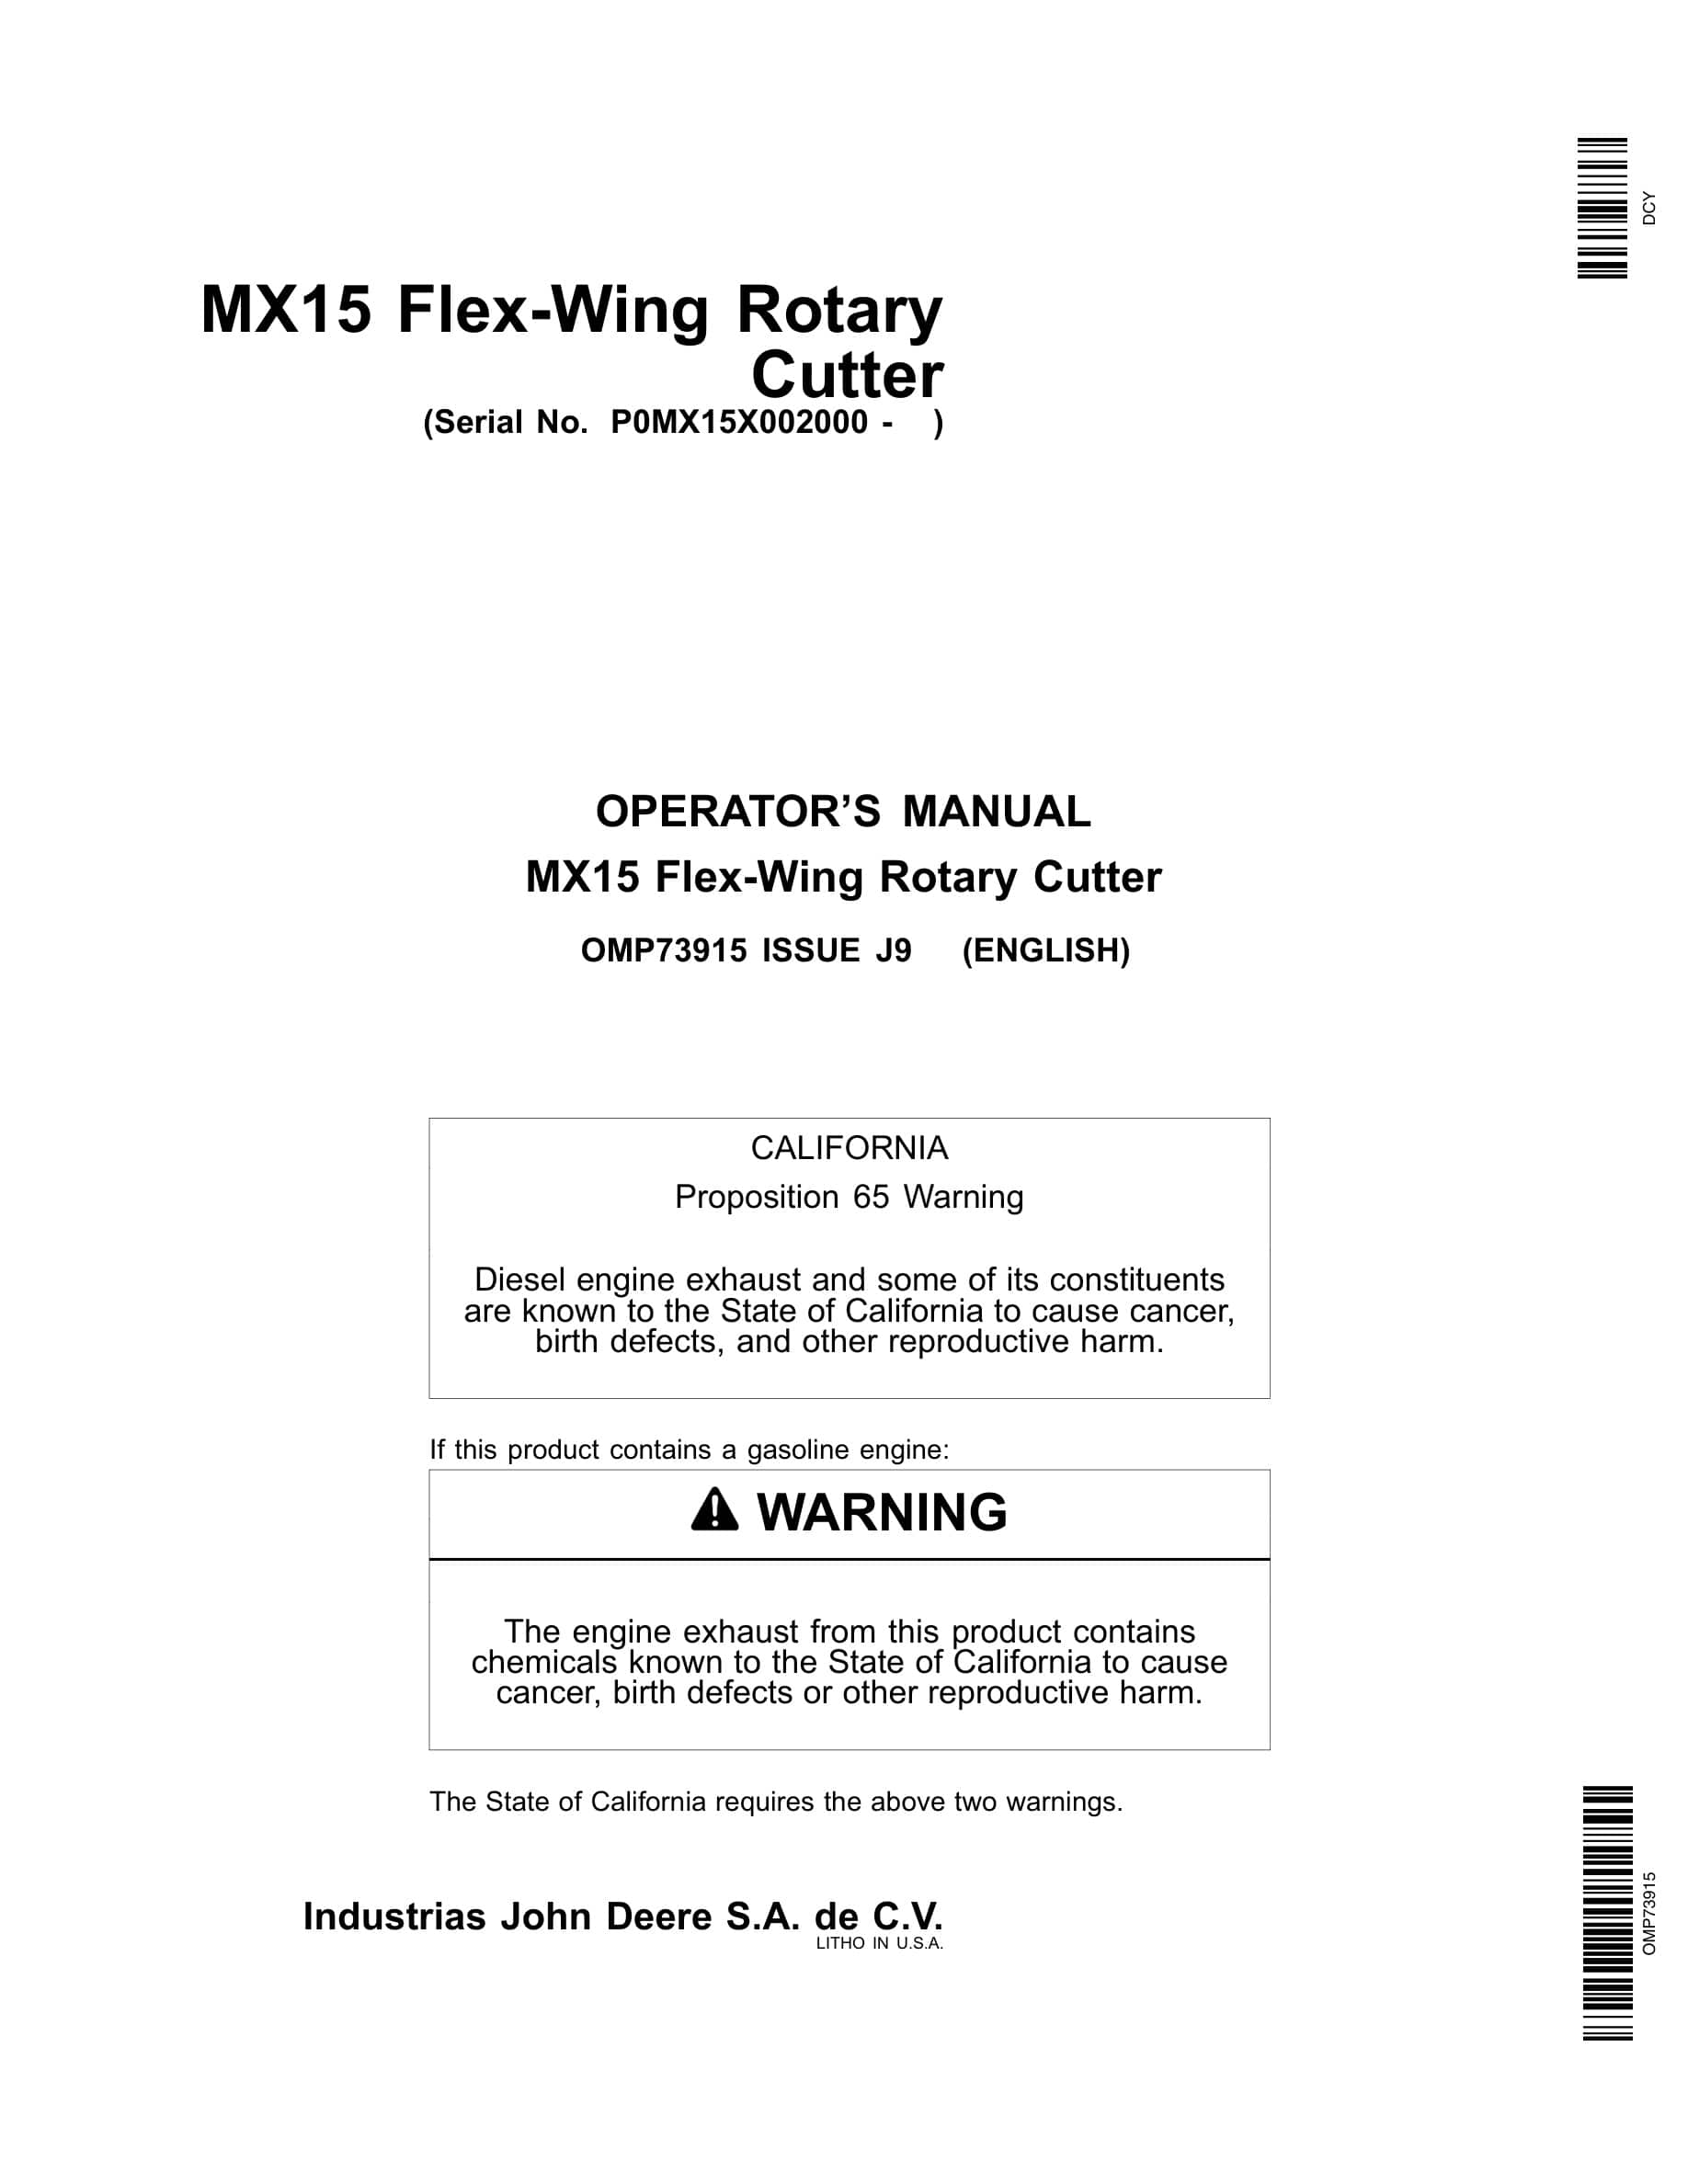 John Deere MX15 Flex-Wing Rotary Cutter Operator Manual OMP73915-1